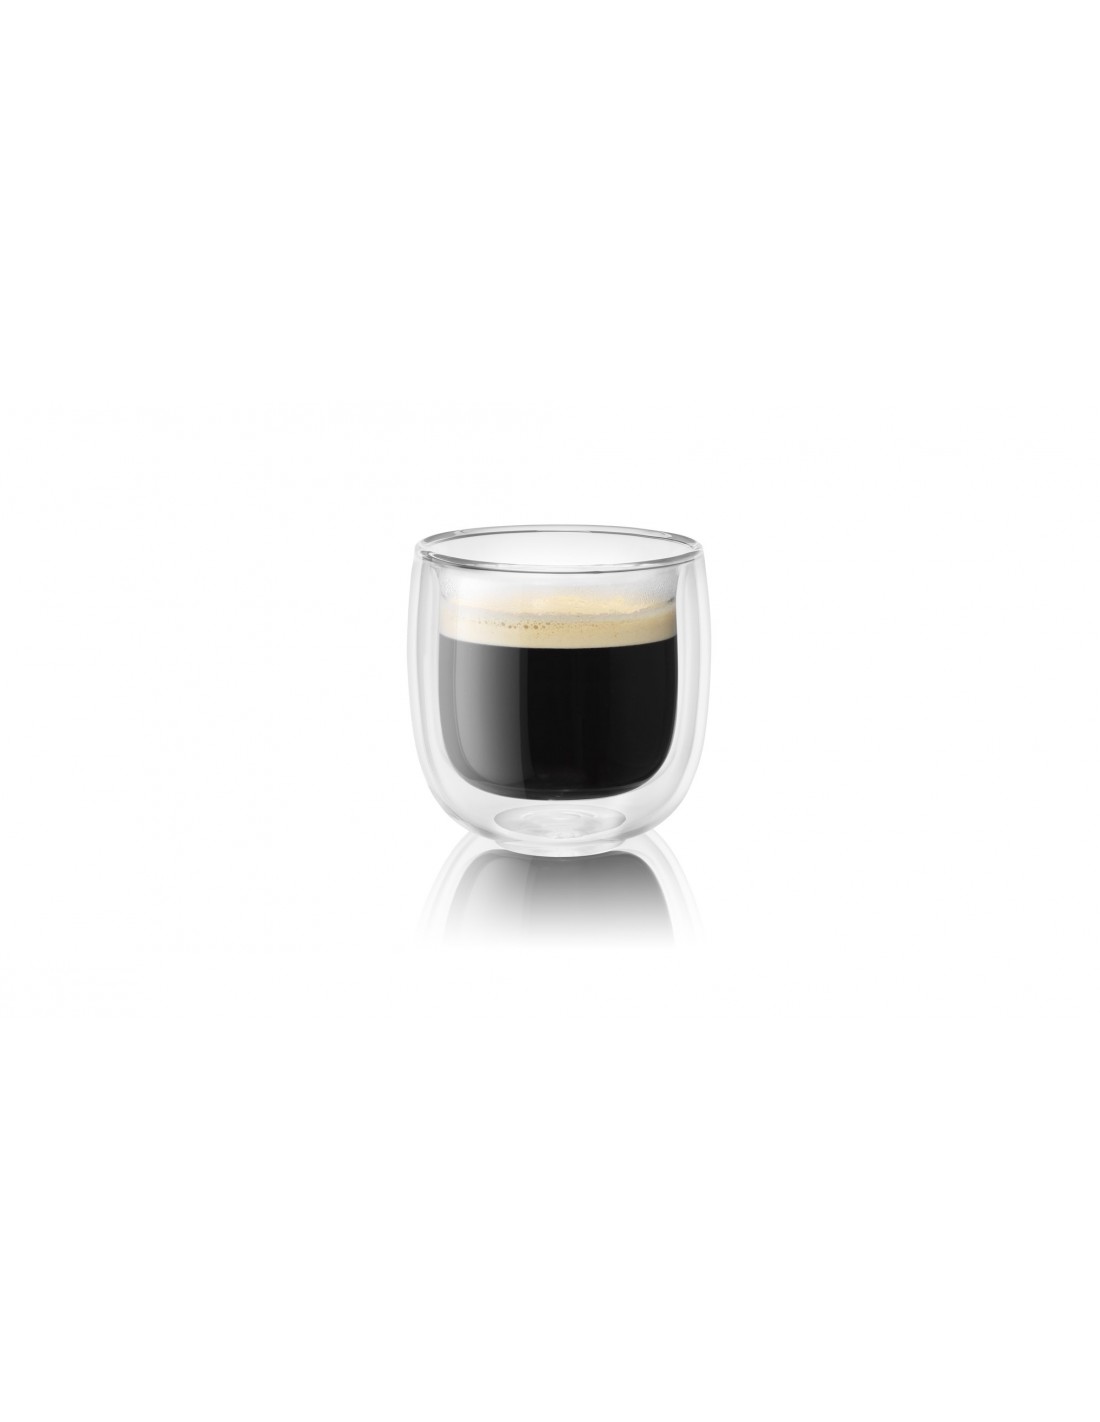 ZWILLING Sorrento Espresso Glass - Set of 2, 80 mL